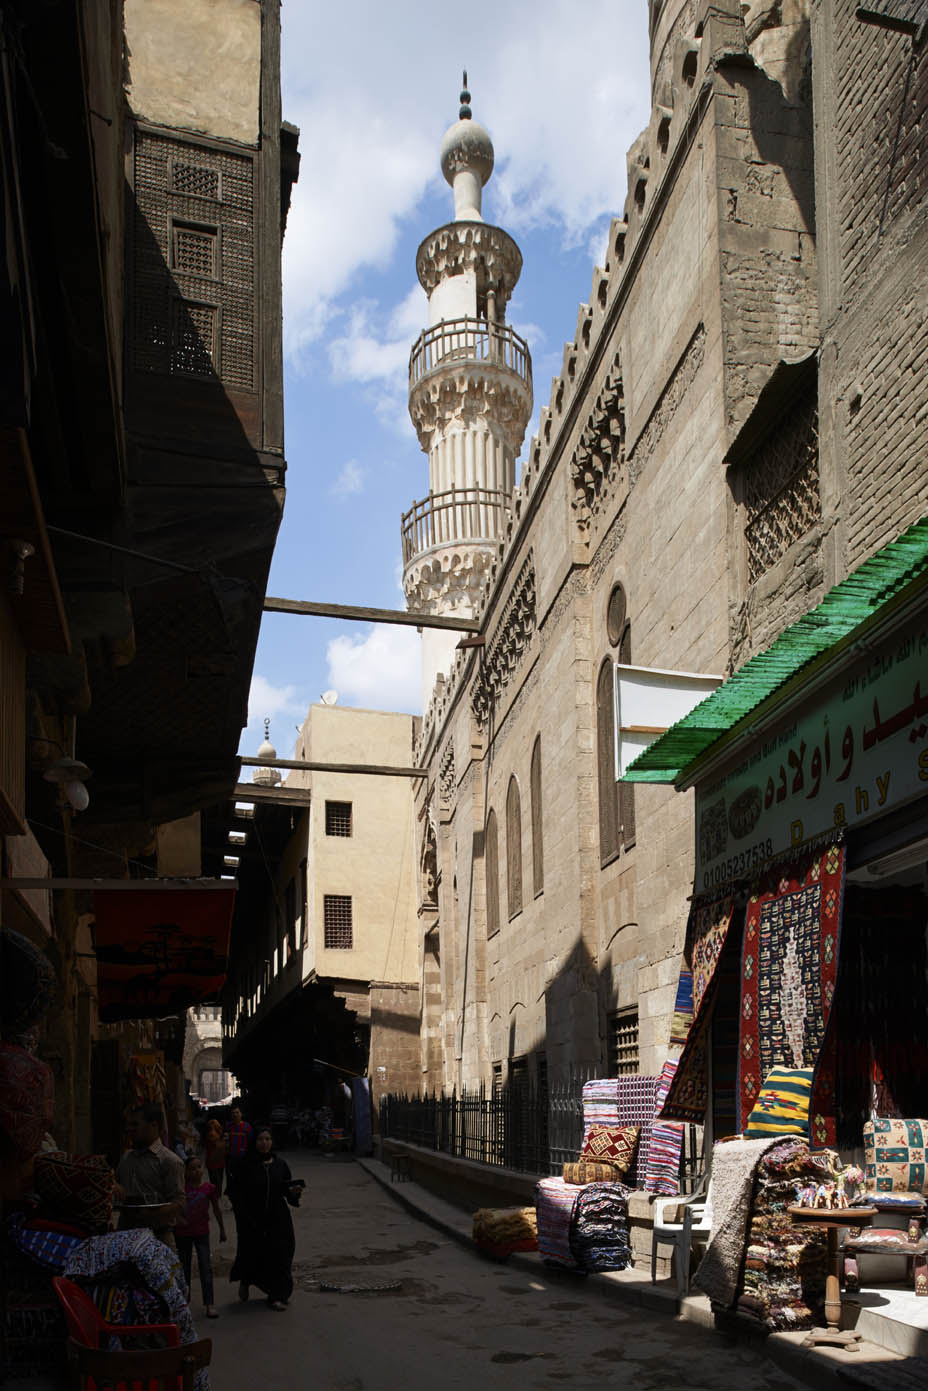 View along street facade, with minaret